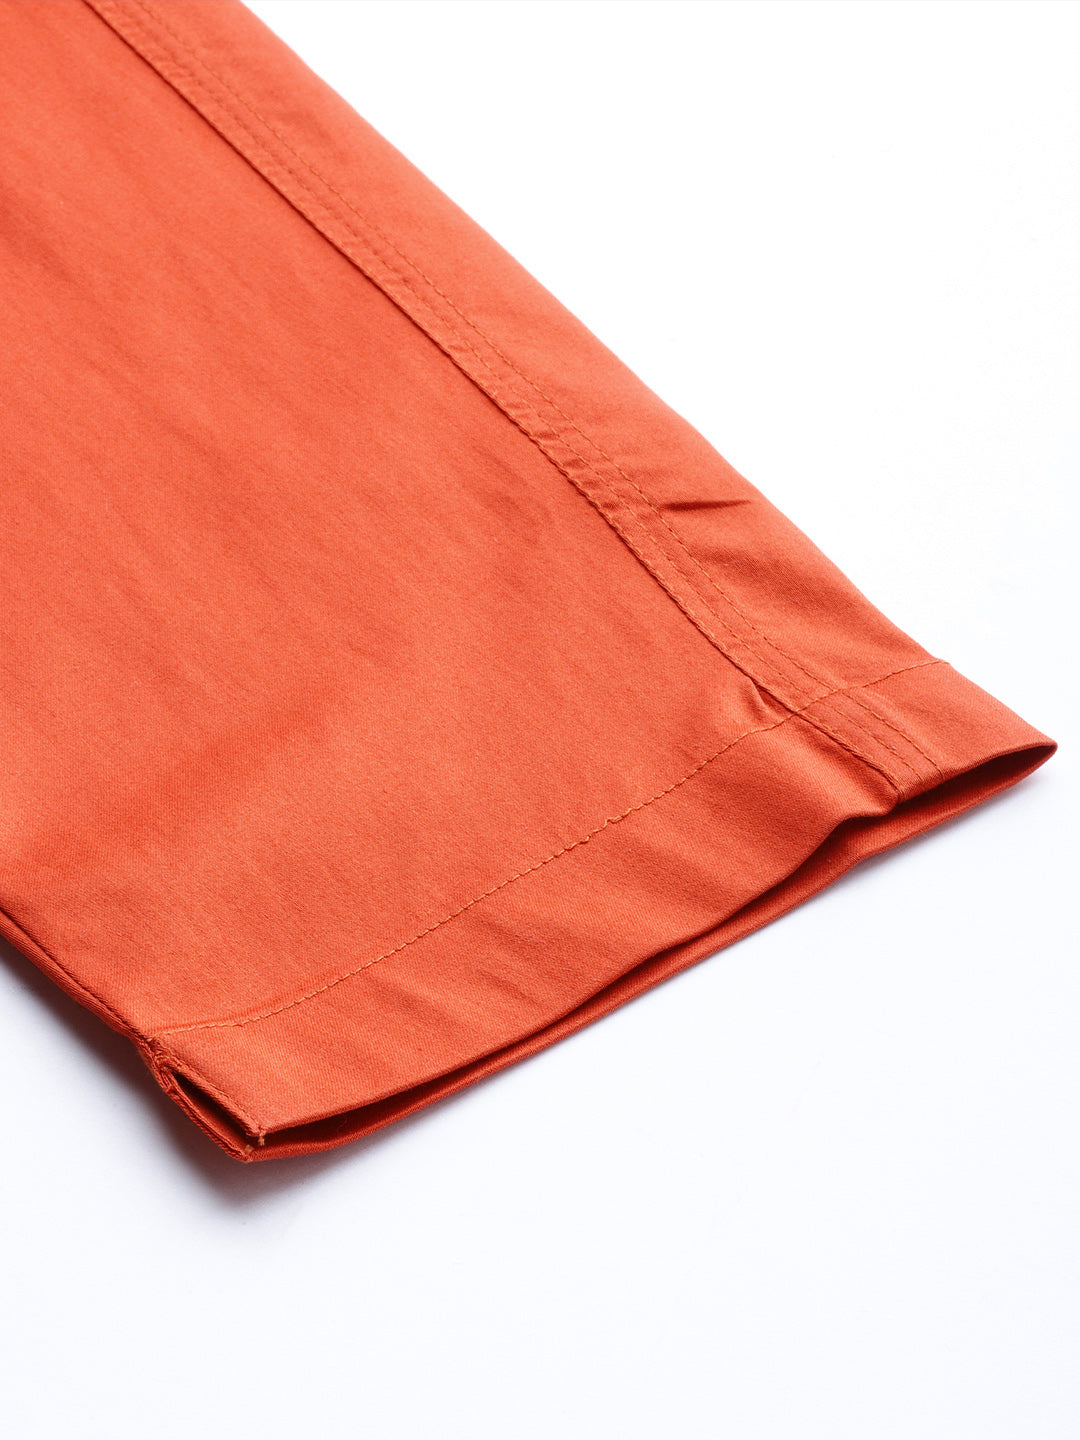 Rust Orange Solid Cotton Lycra Pleated Pants